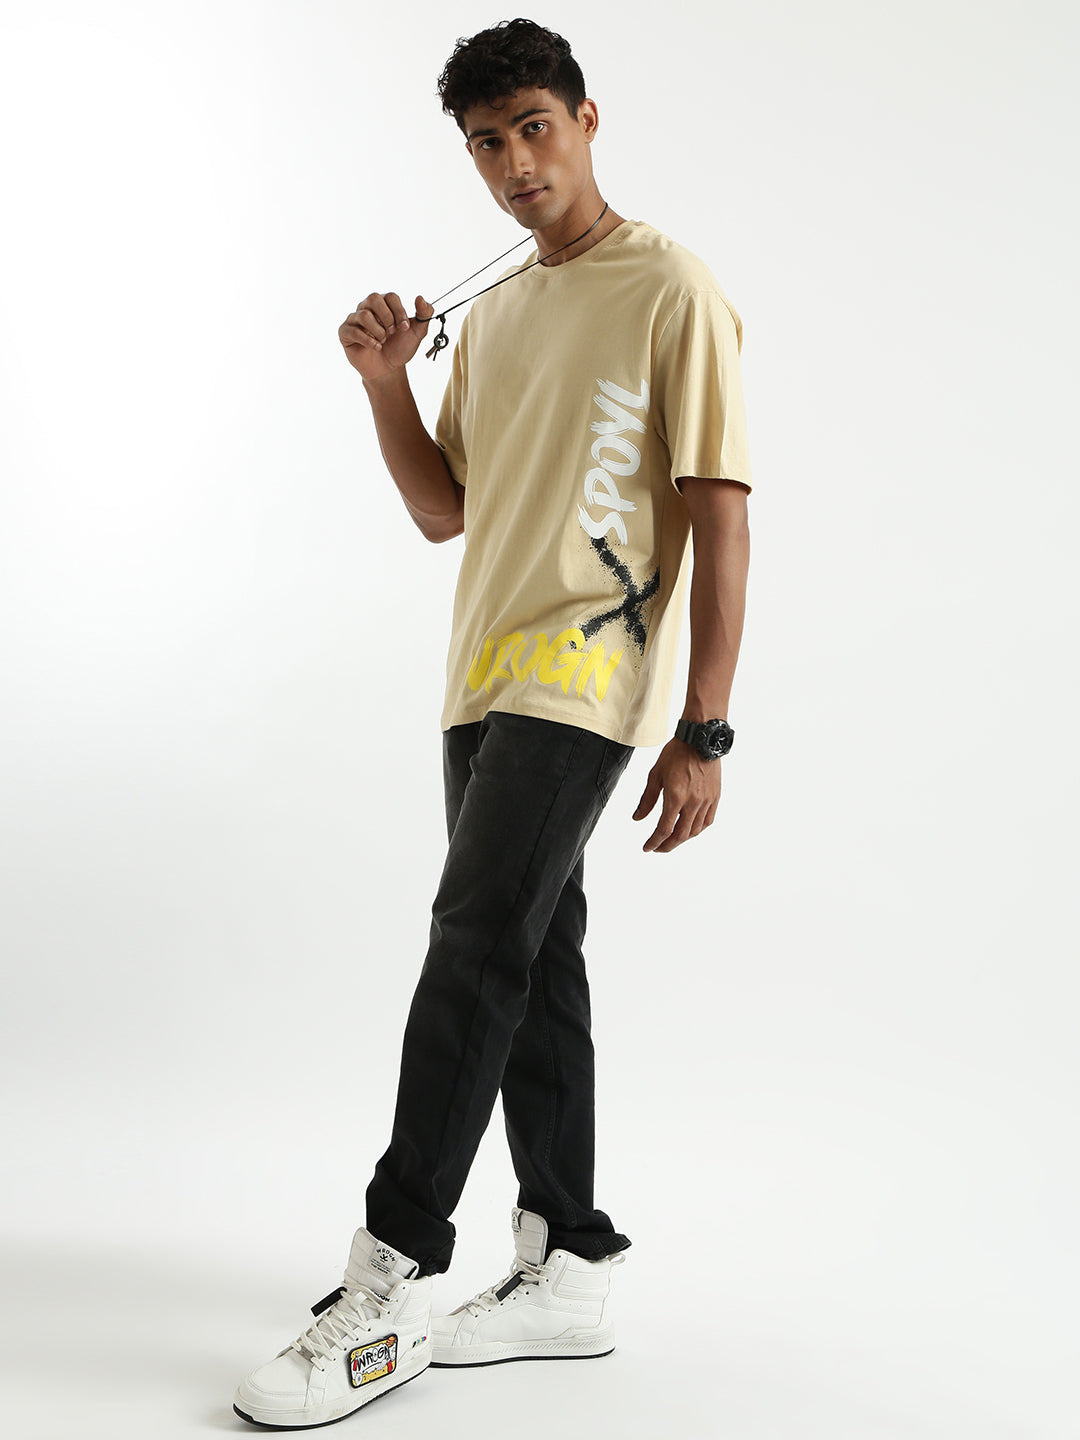 Wrogn X Spoyl Yellow T-Shirt